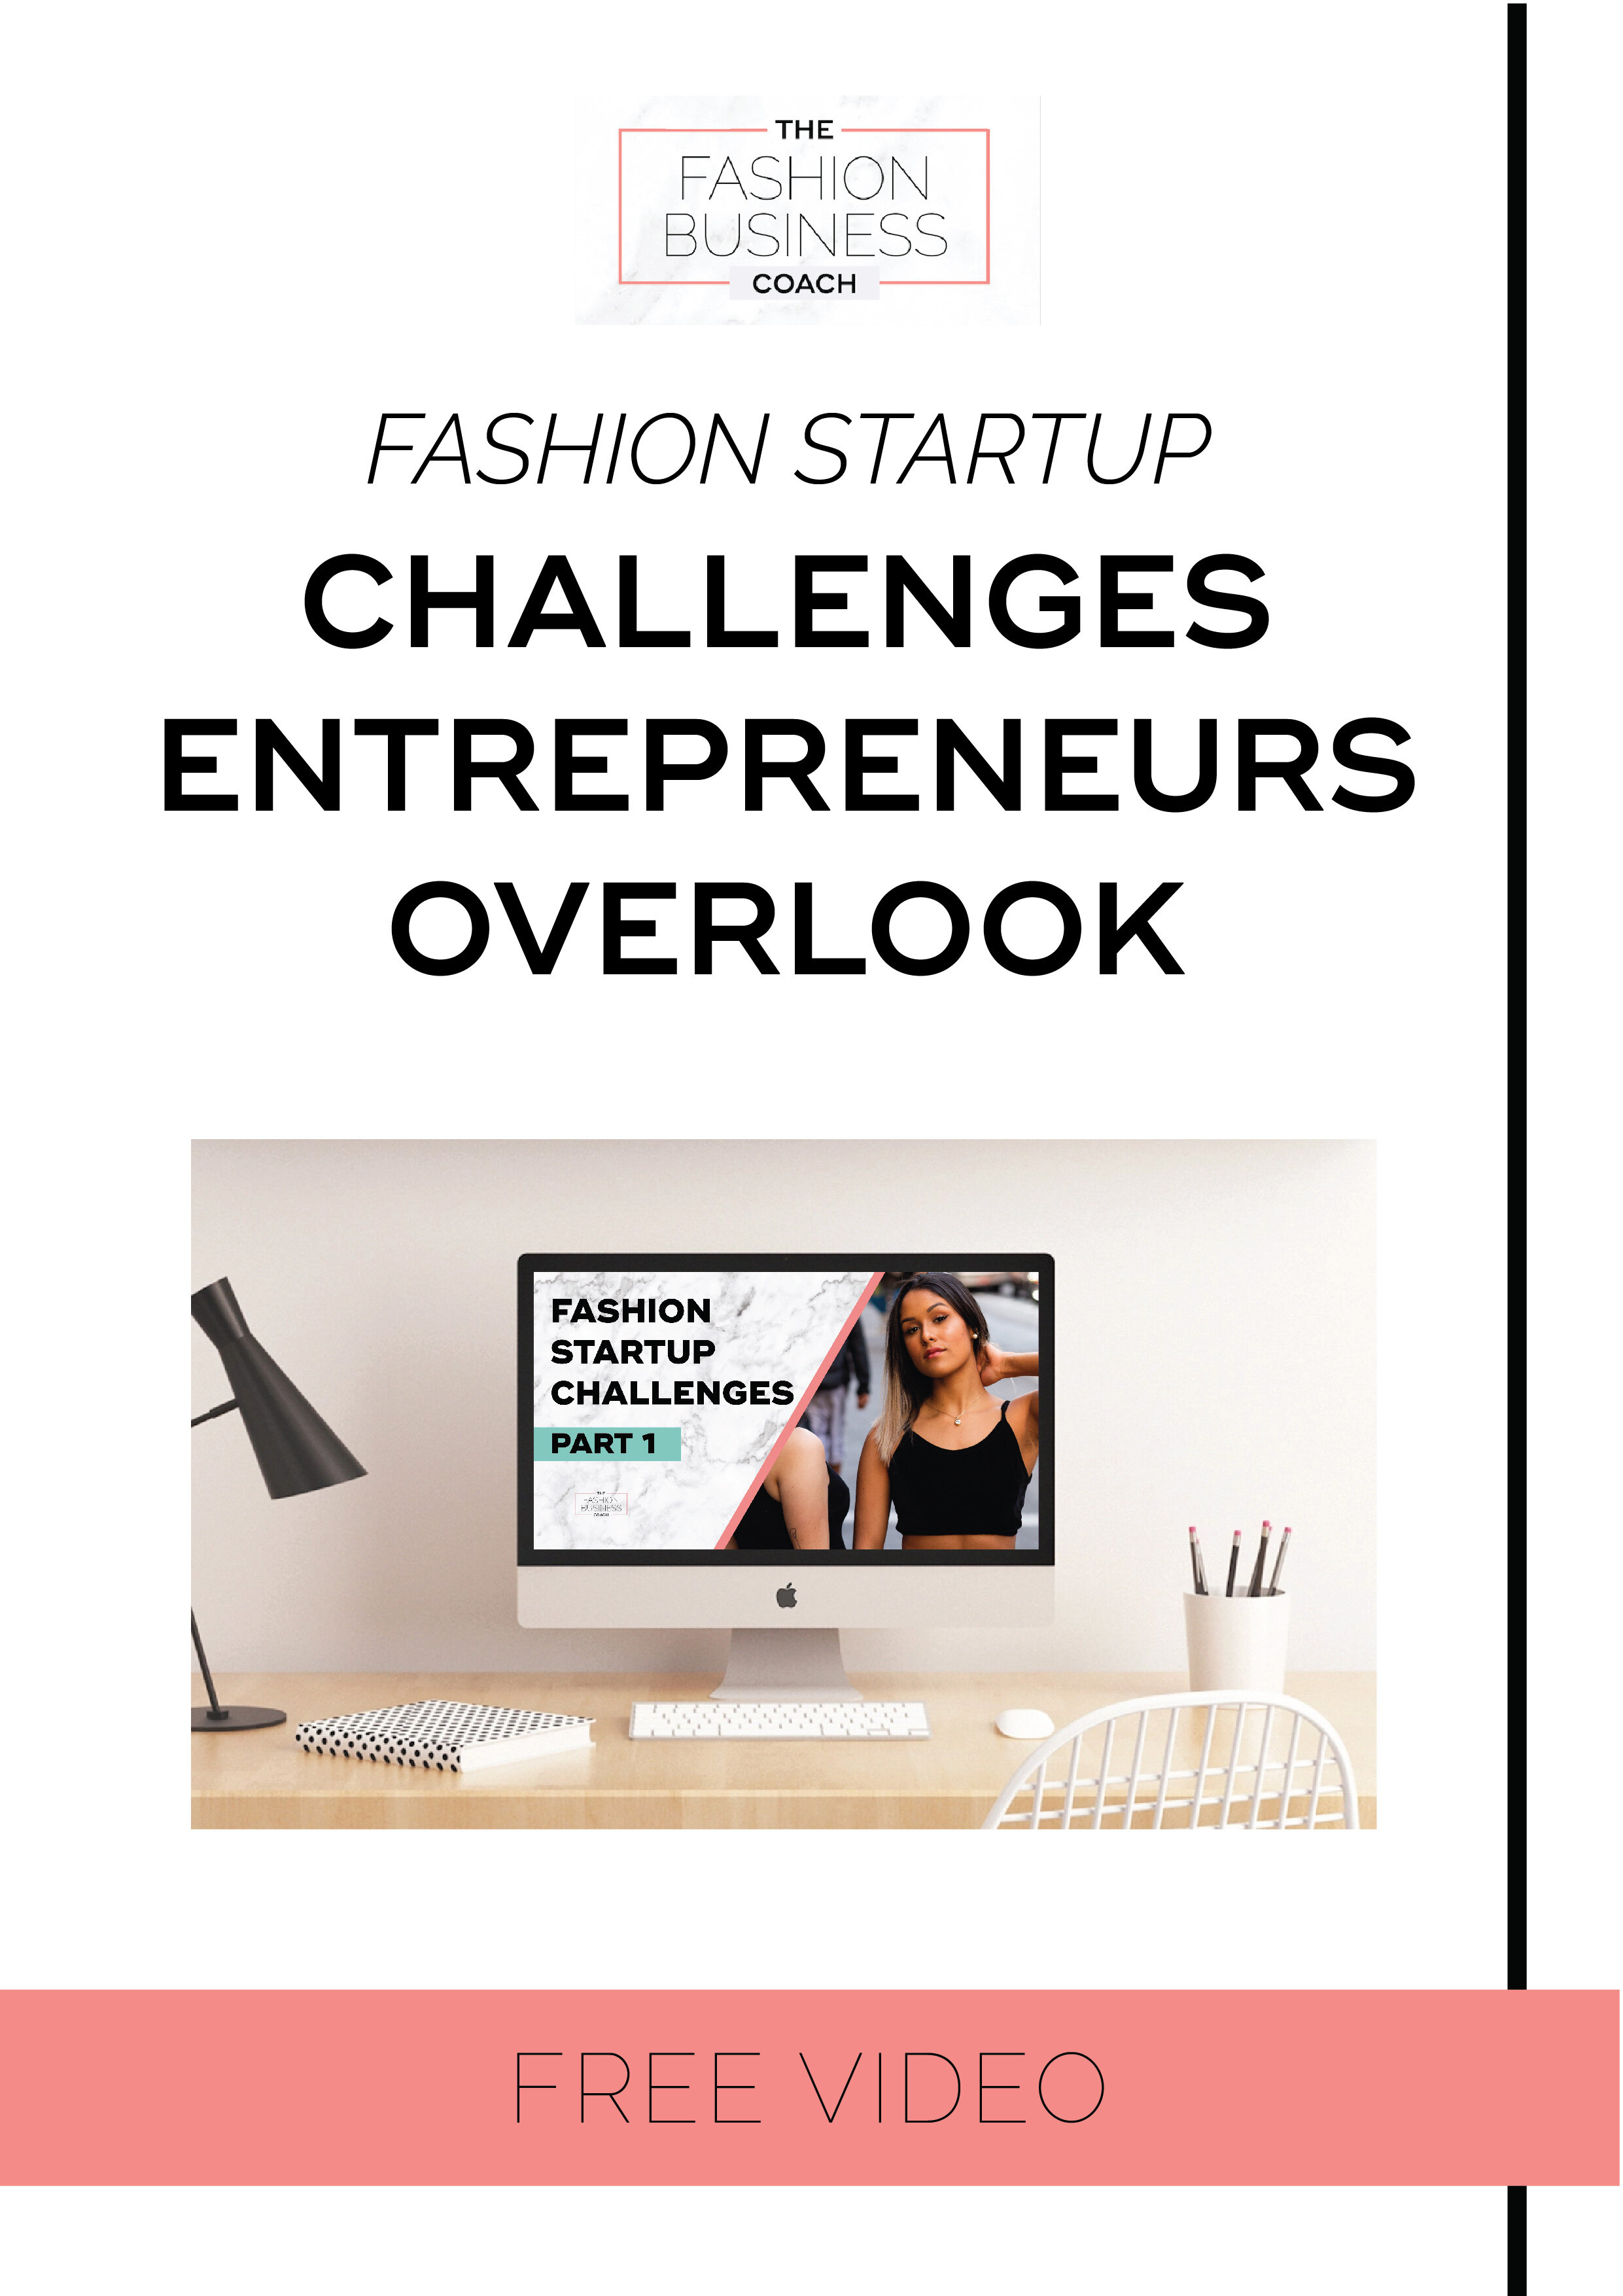 Fashion Startup Challenges Enterpreneurs Overlook2.jpg